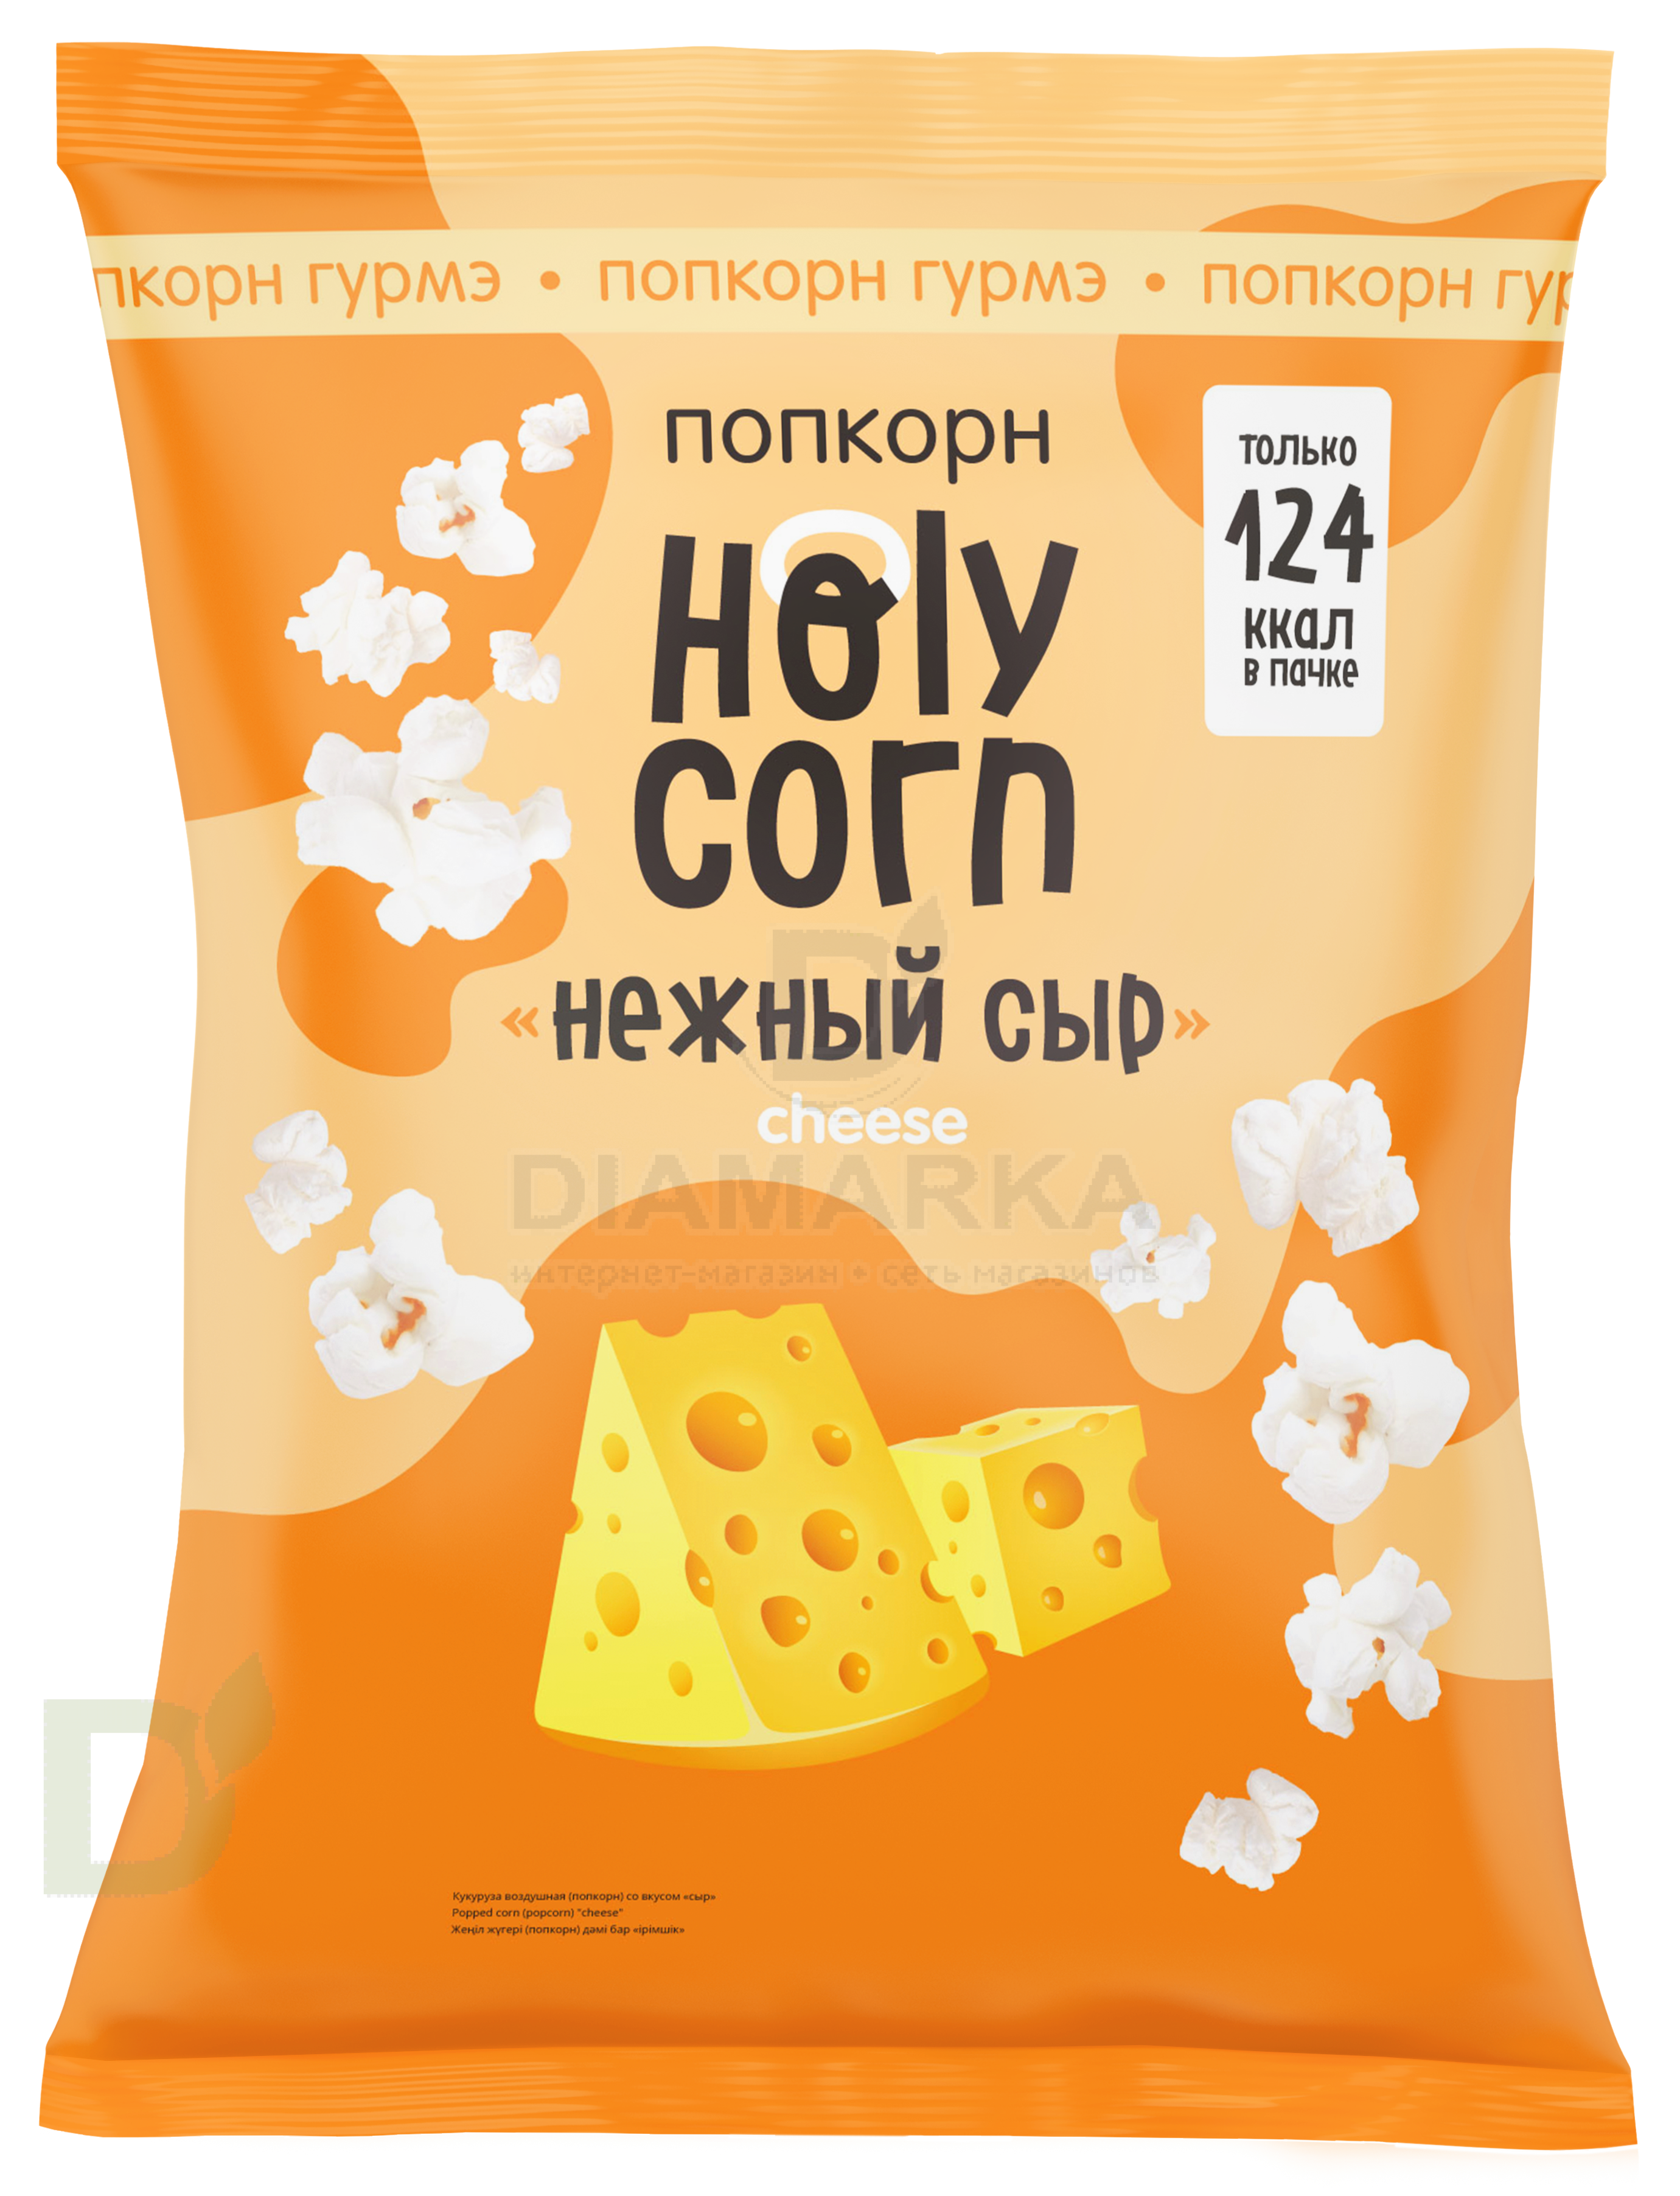 Попкорн Holy Corn "Сыр" 25г.